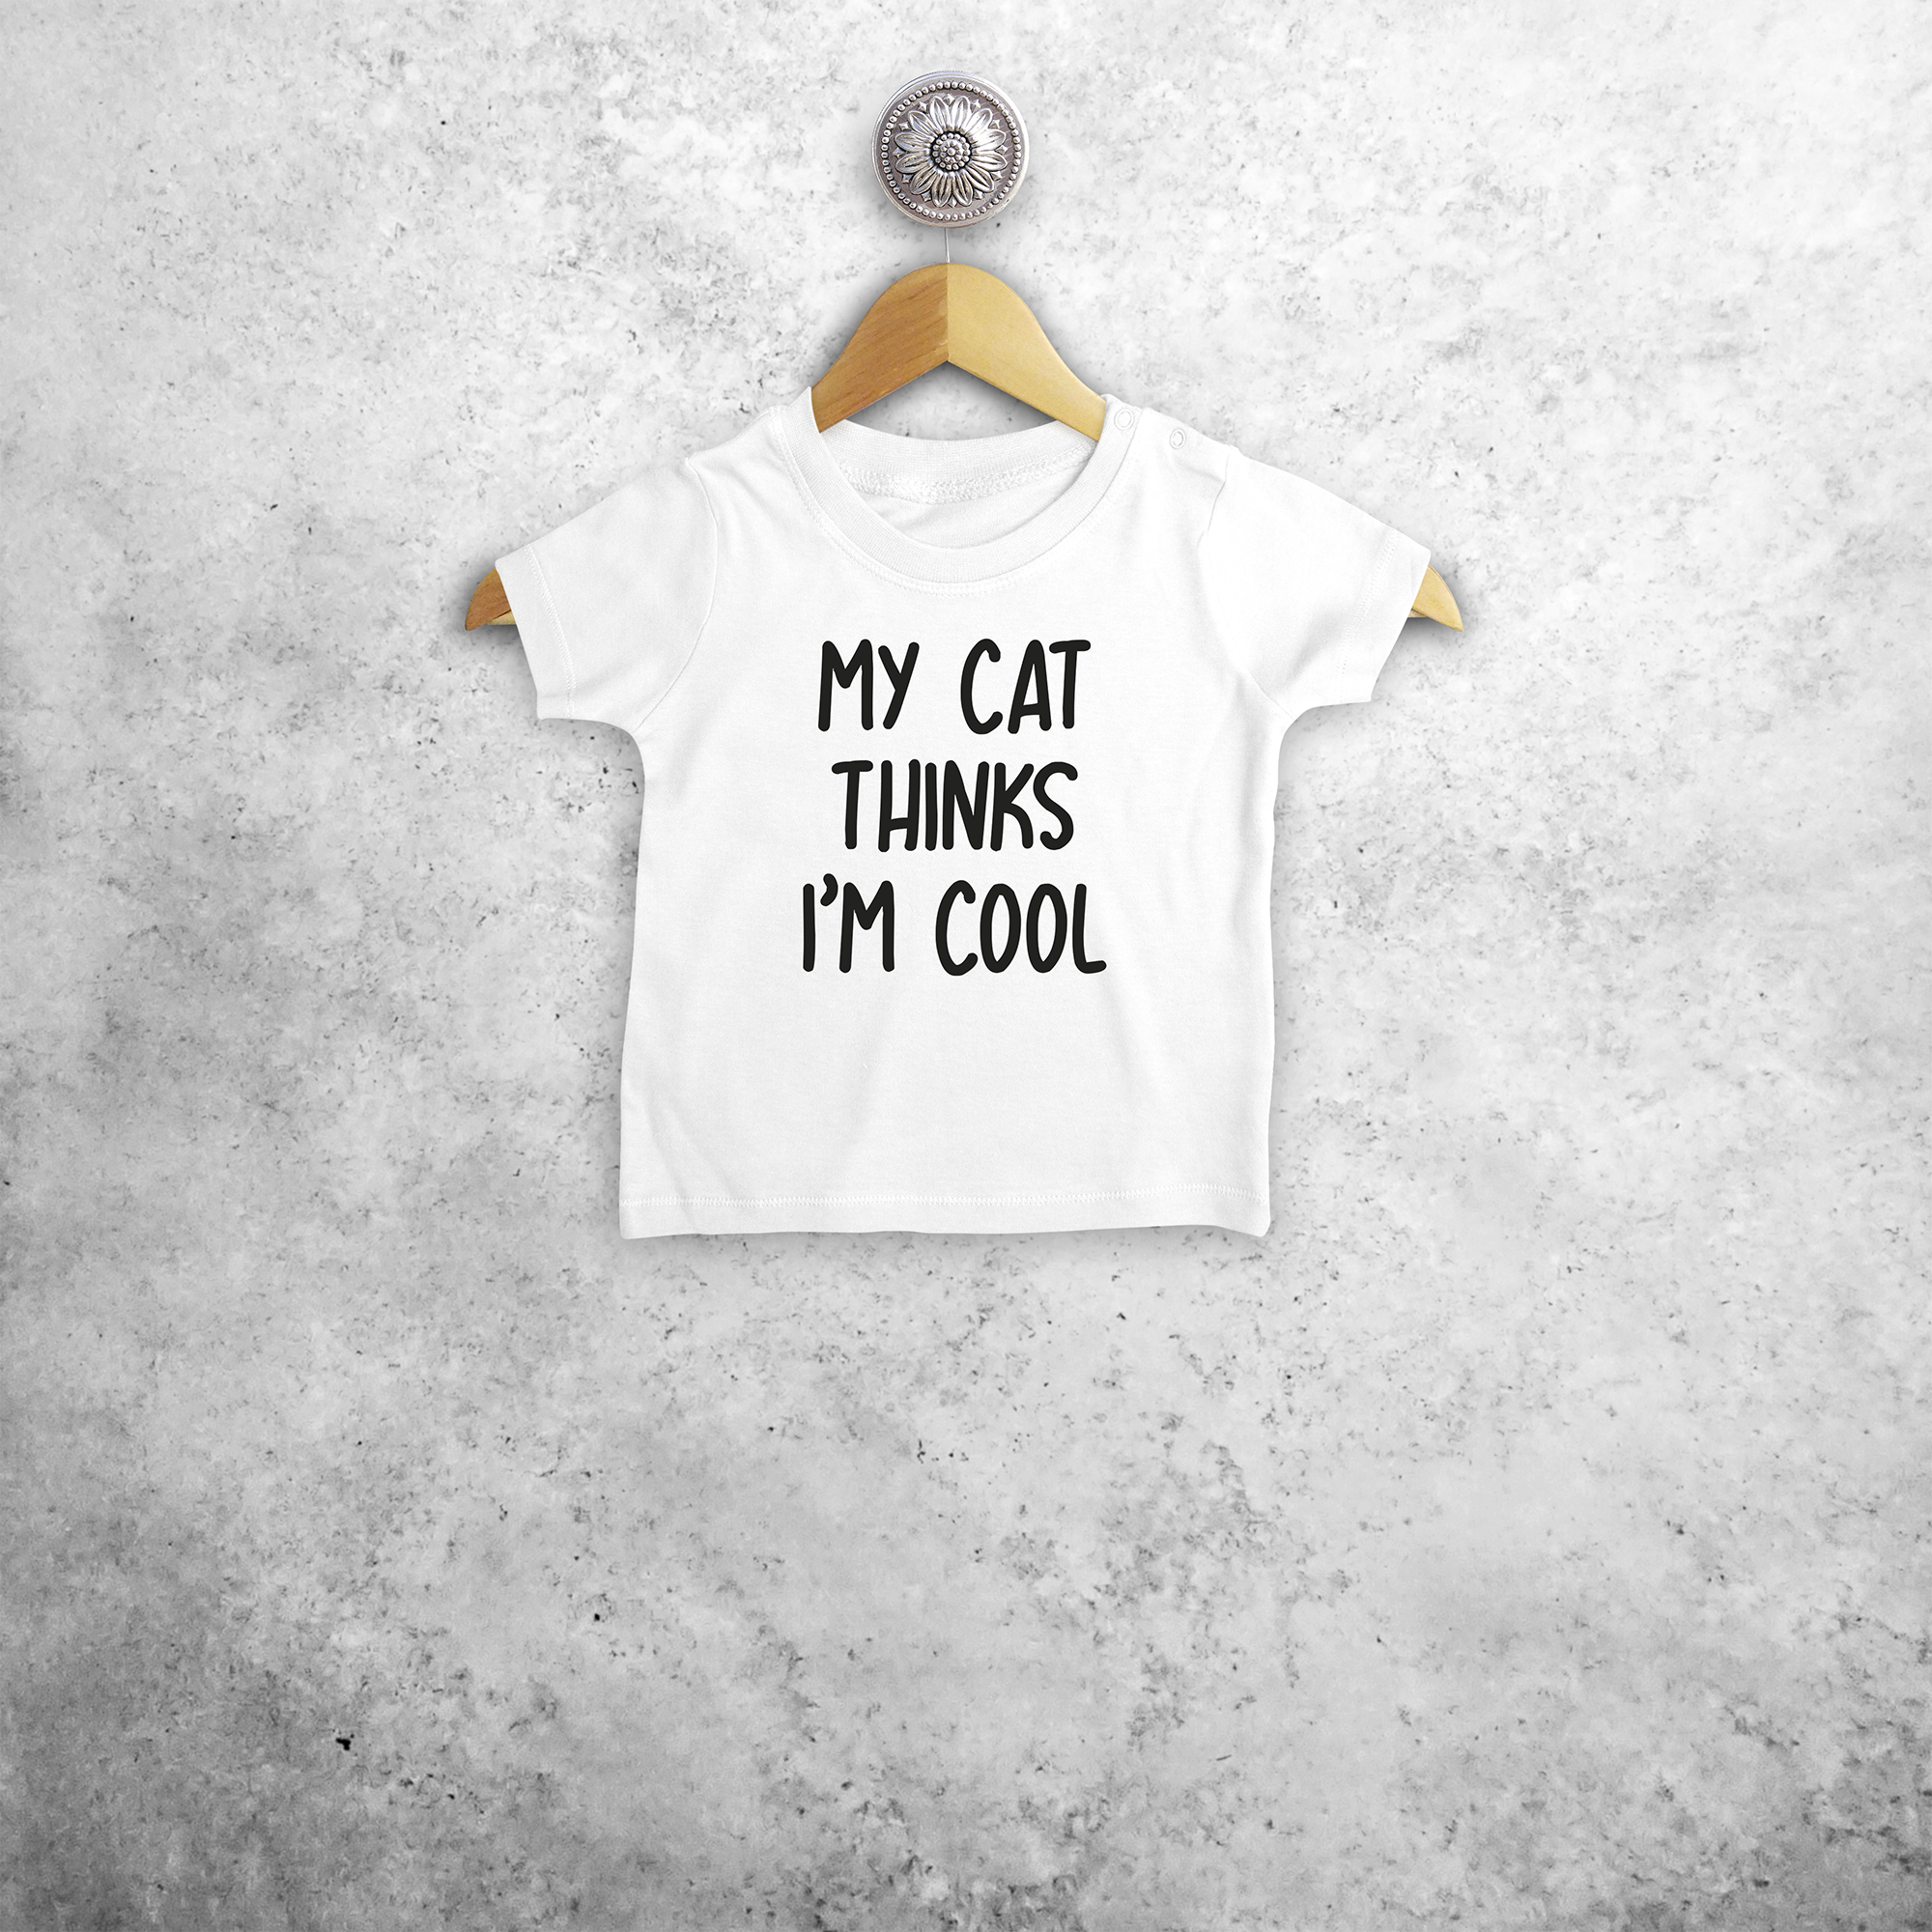 'My cat thinks I'm cool' baby shortsleeve shirt